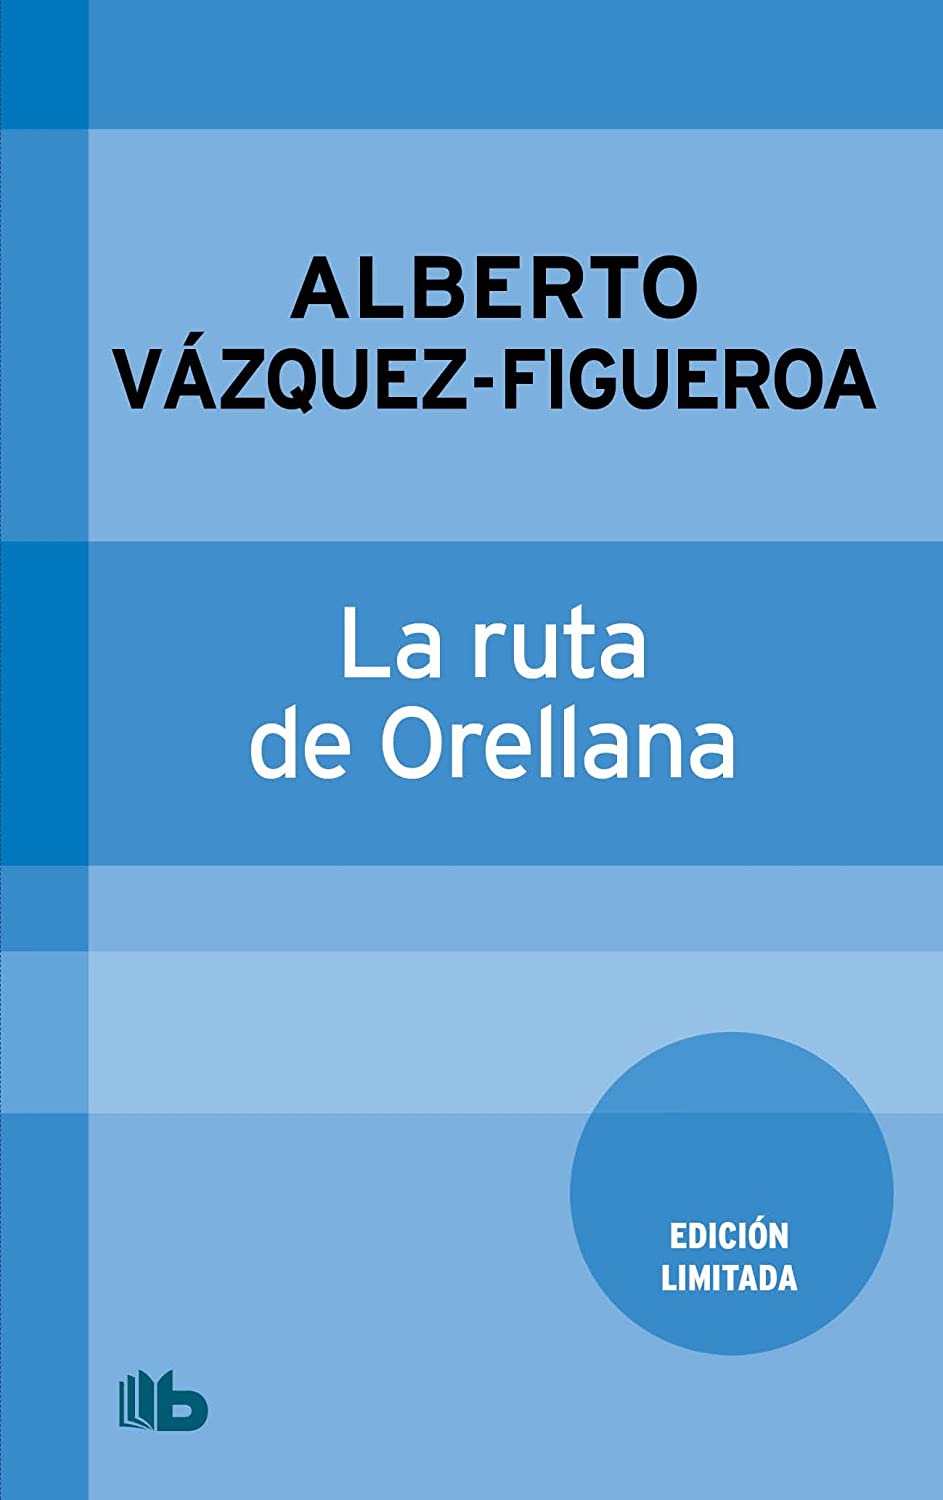 La ruta de Orellana: Campa&ntilde;a 5 euros (nuevo formato) (B DE BOLSILLO) (Spanish Edition)